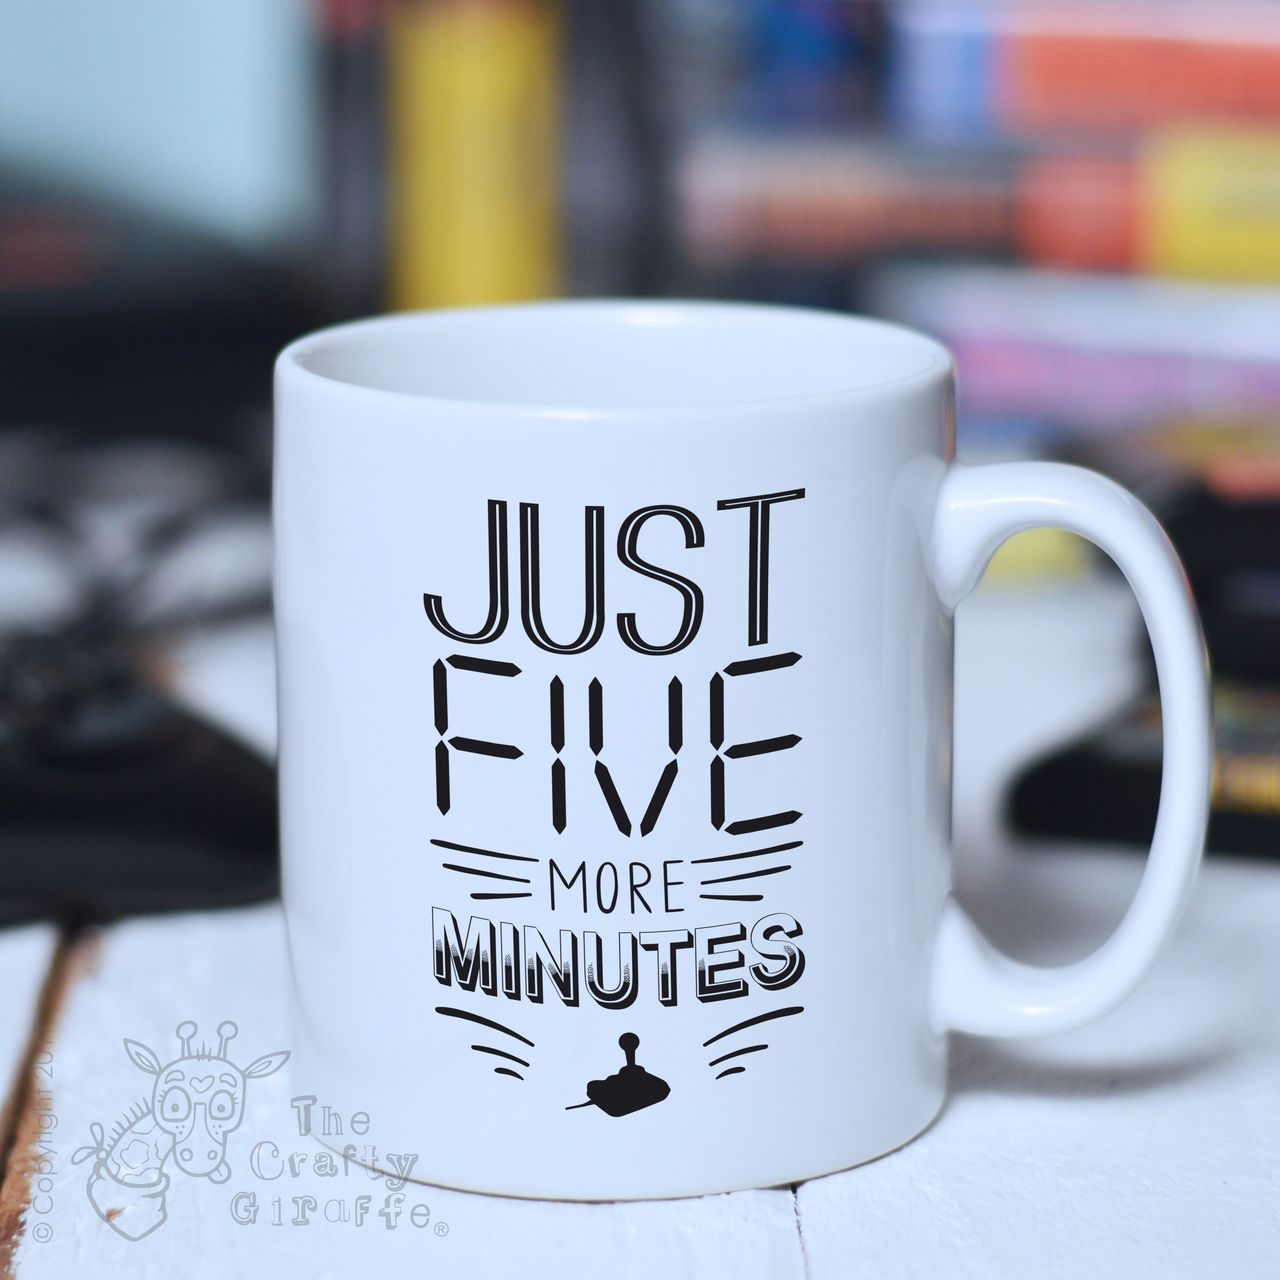 Just five more minutes Mug